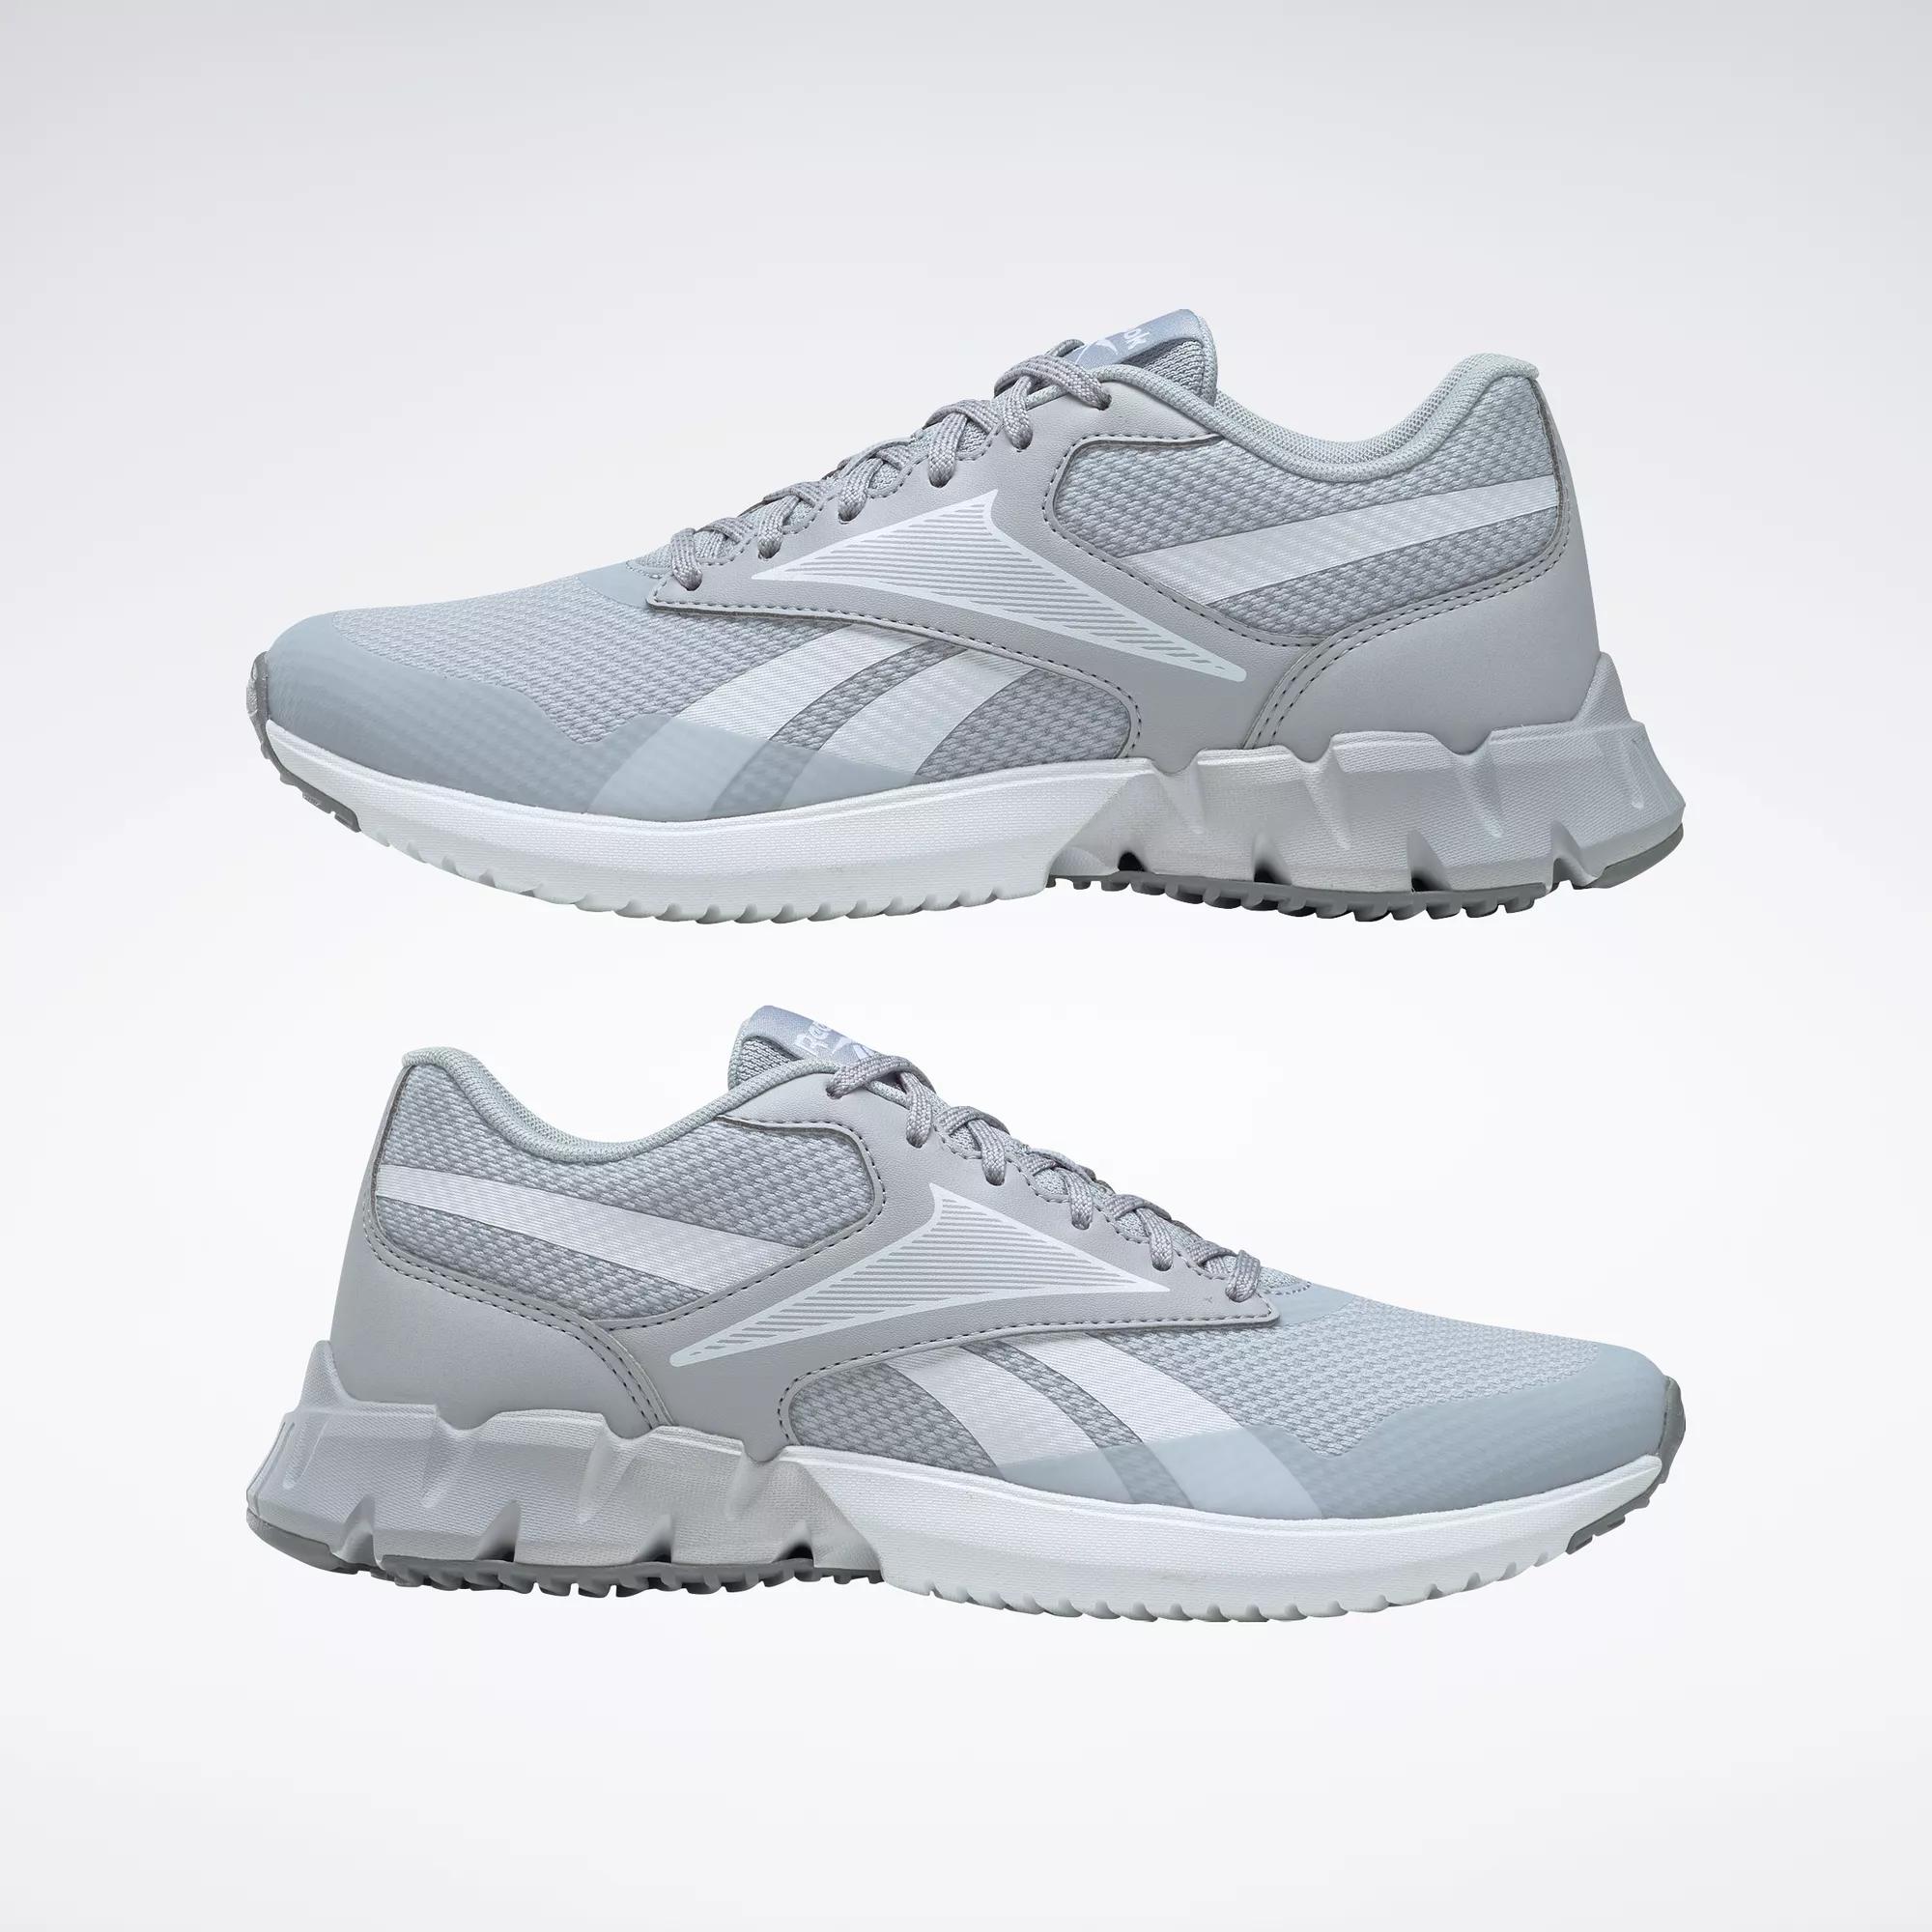 Ztaur Run Women's Running Shoes | eBay